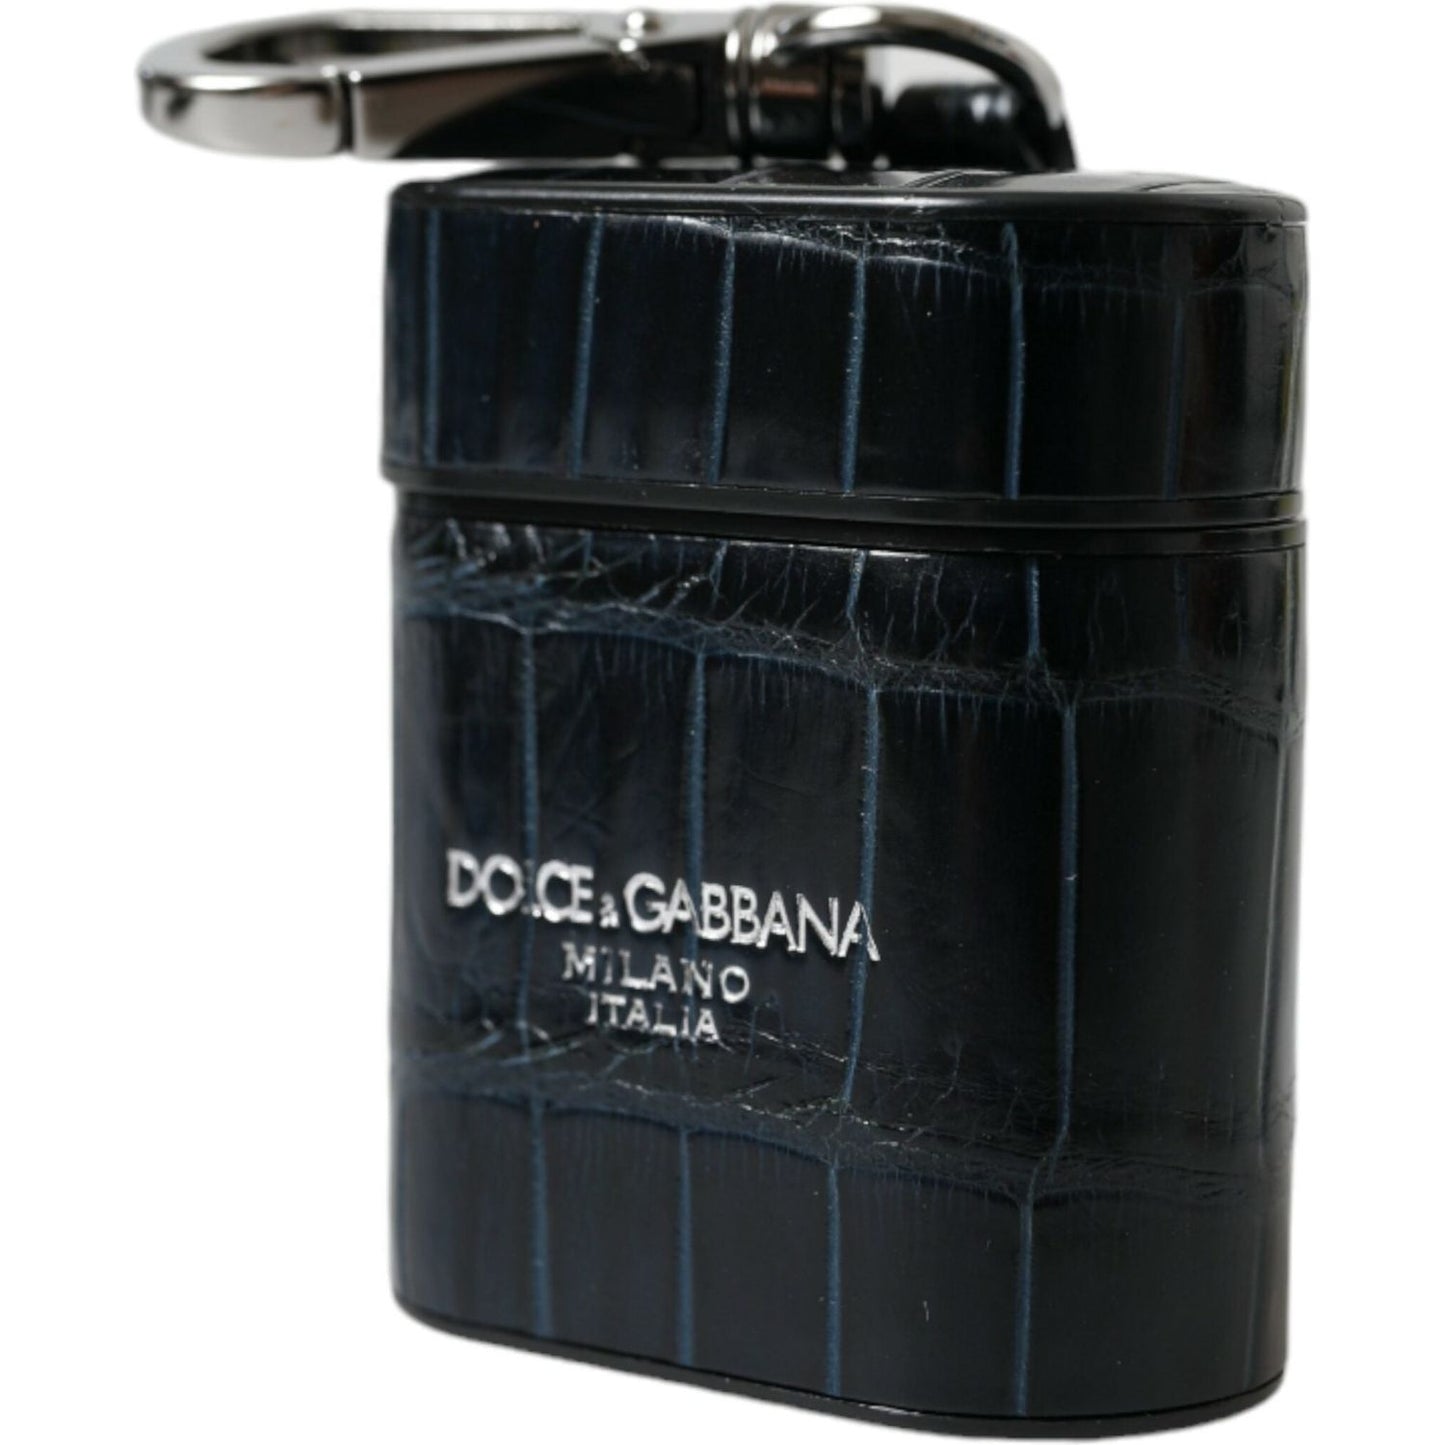 Dolce & Gabbana Chic Crocodile Leather Airpods Case chic-crocodile-leather-airpods-case